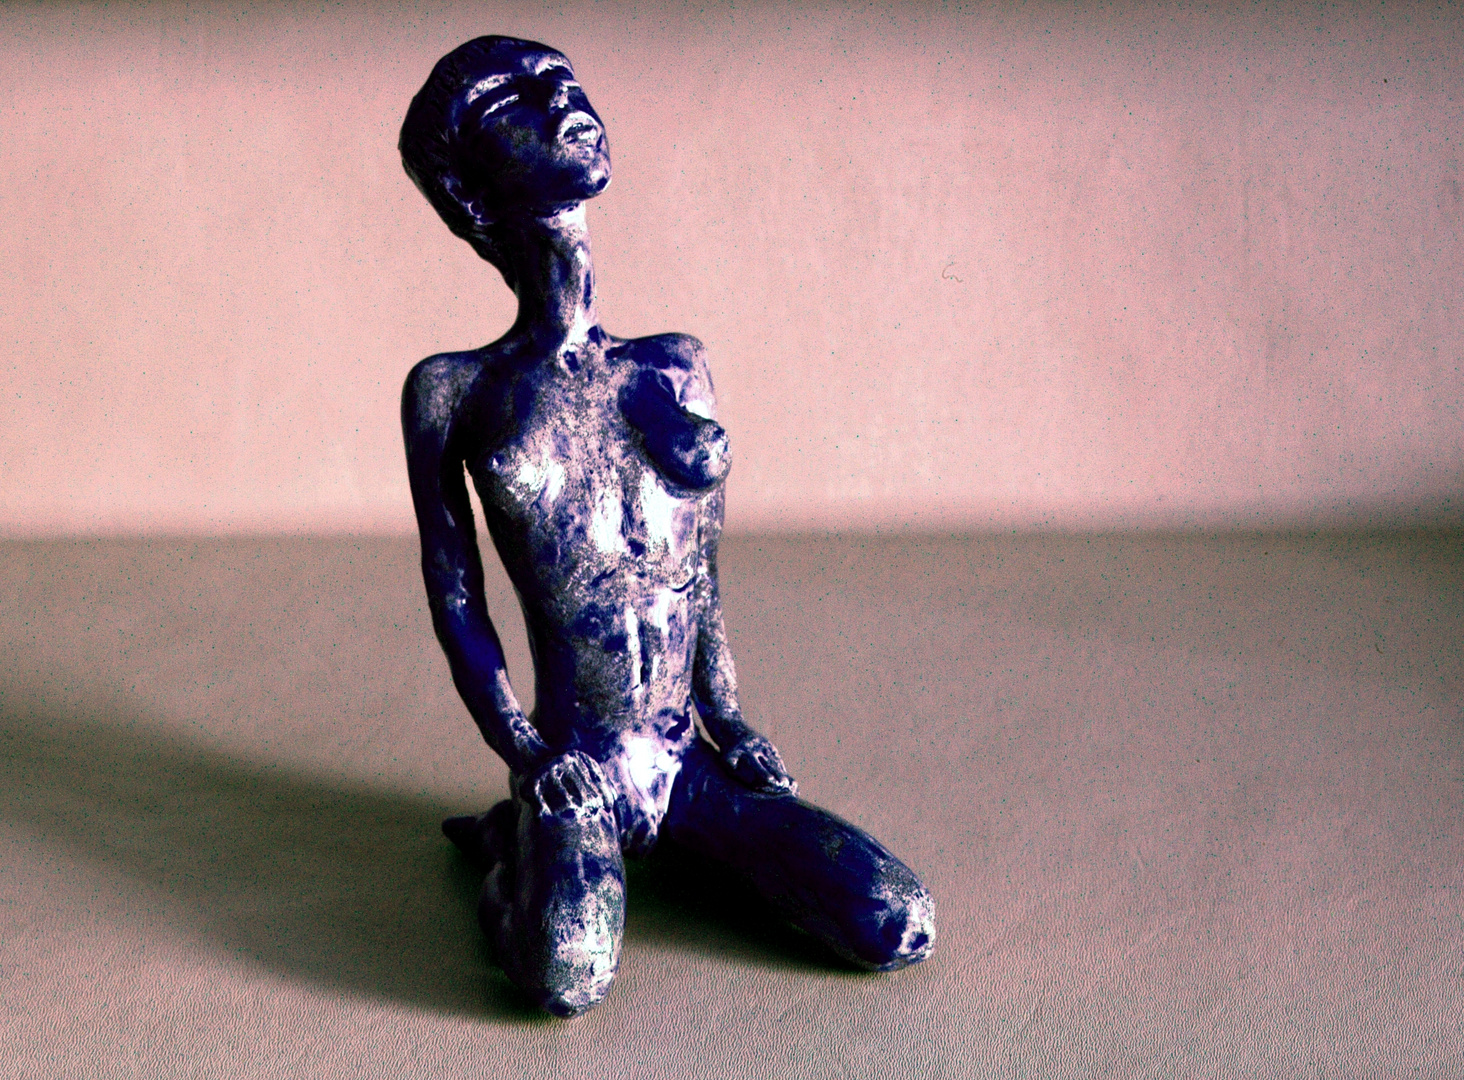 Figurine in Infrared light